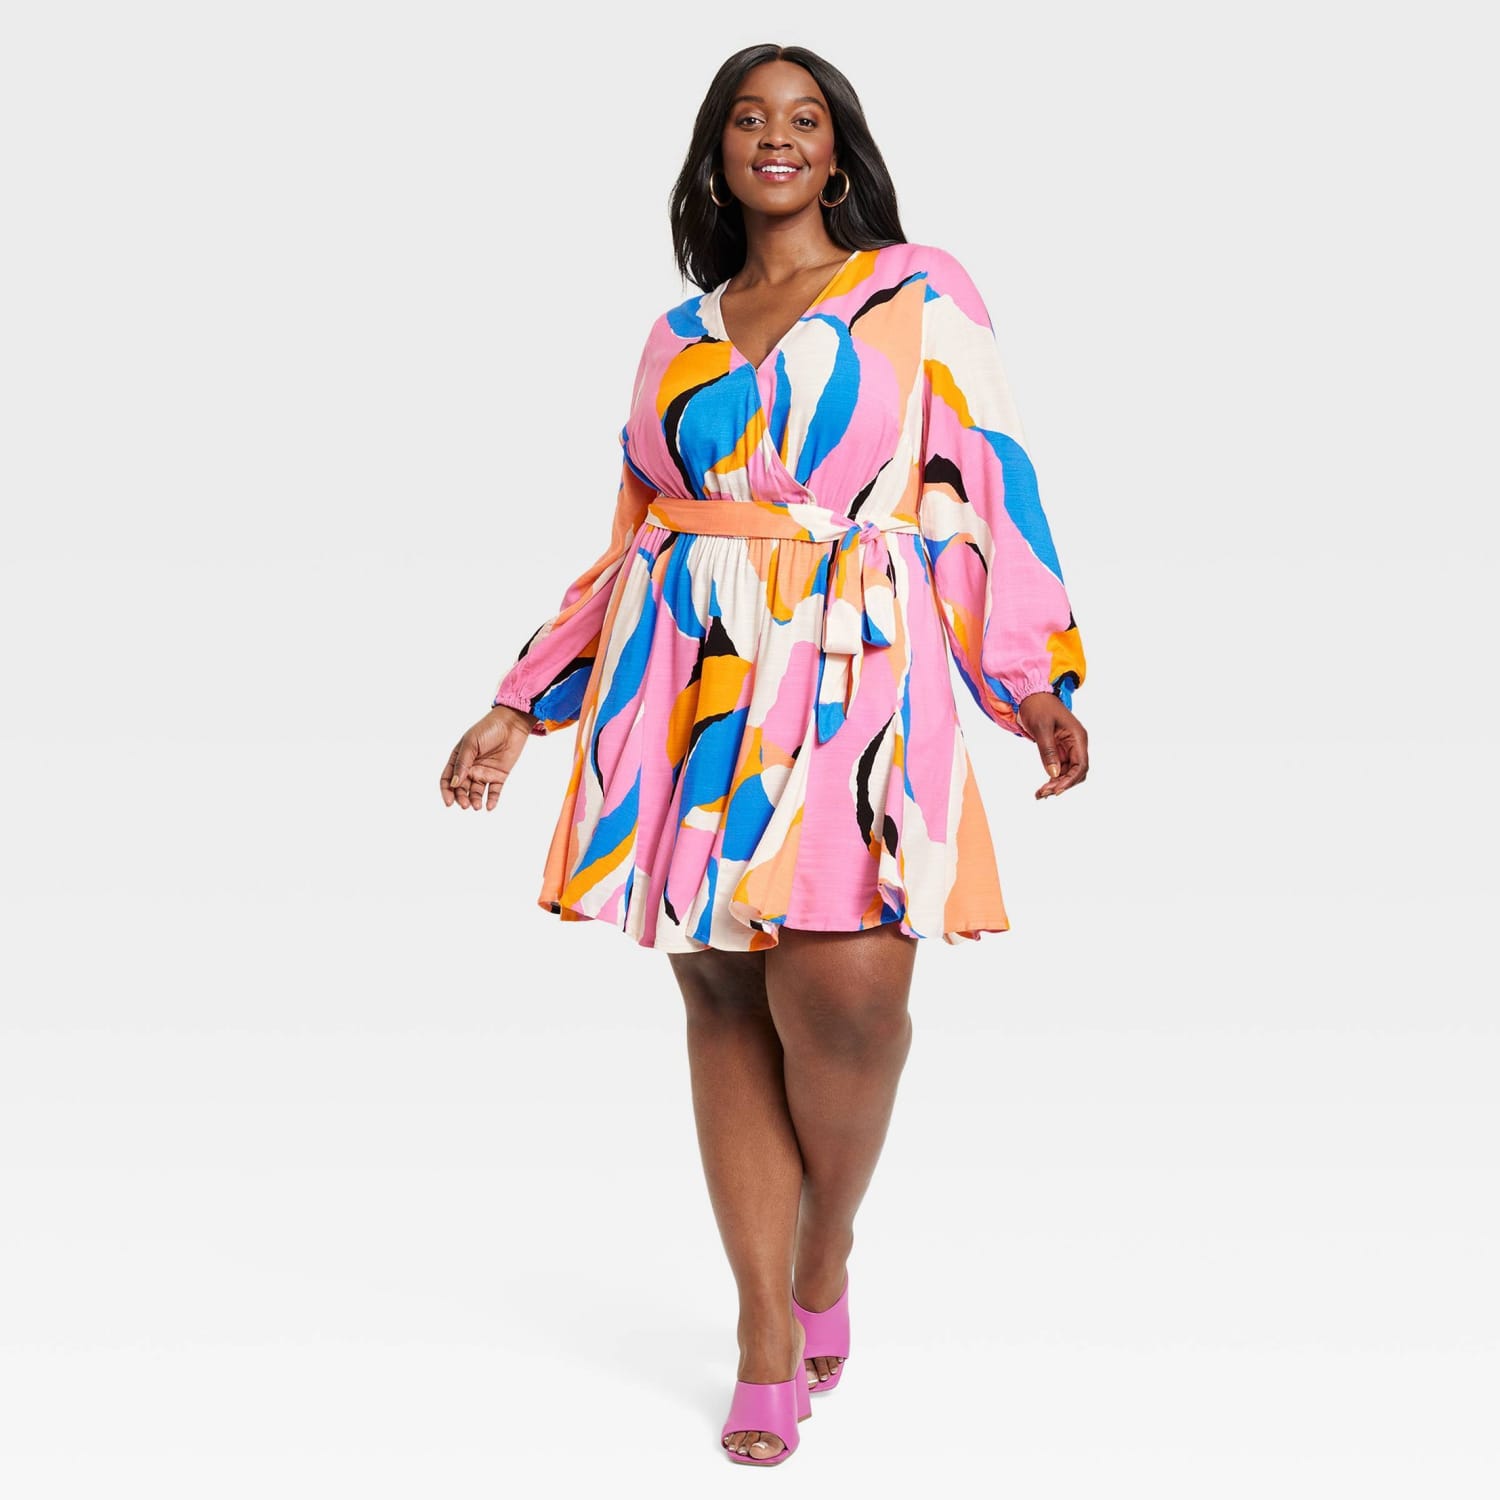 Shop 15 Target spring dresses on sale now — up to 20% off